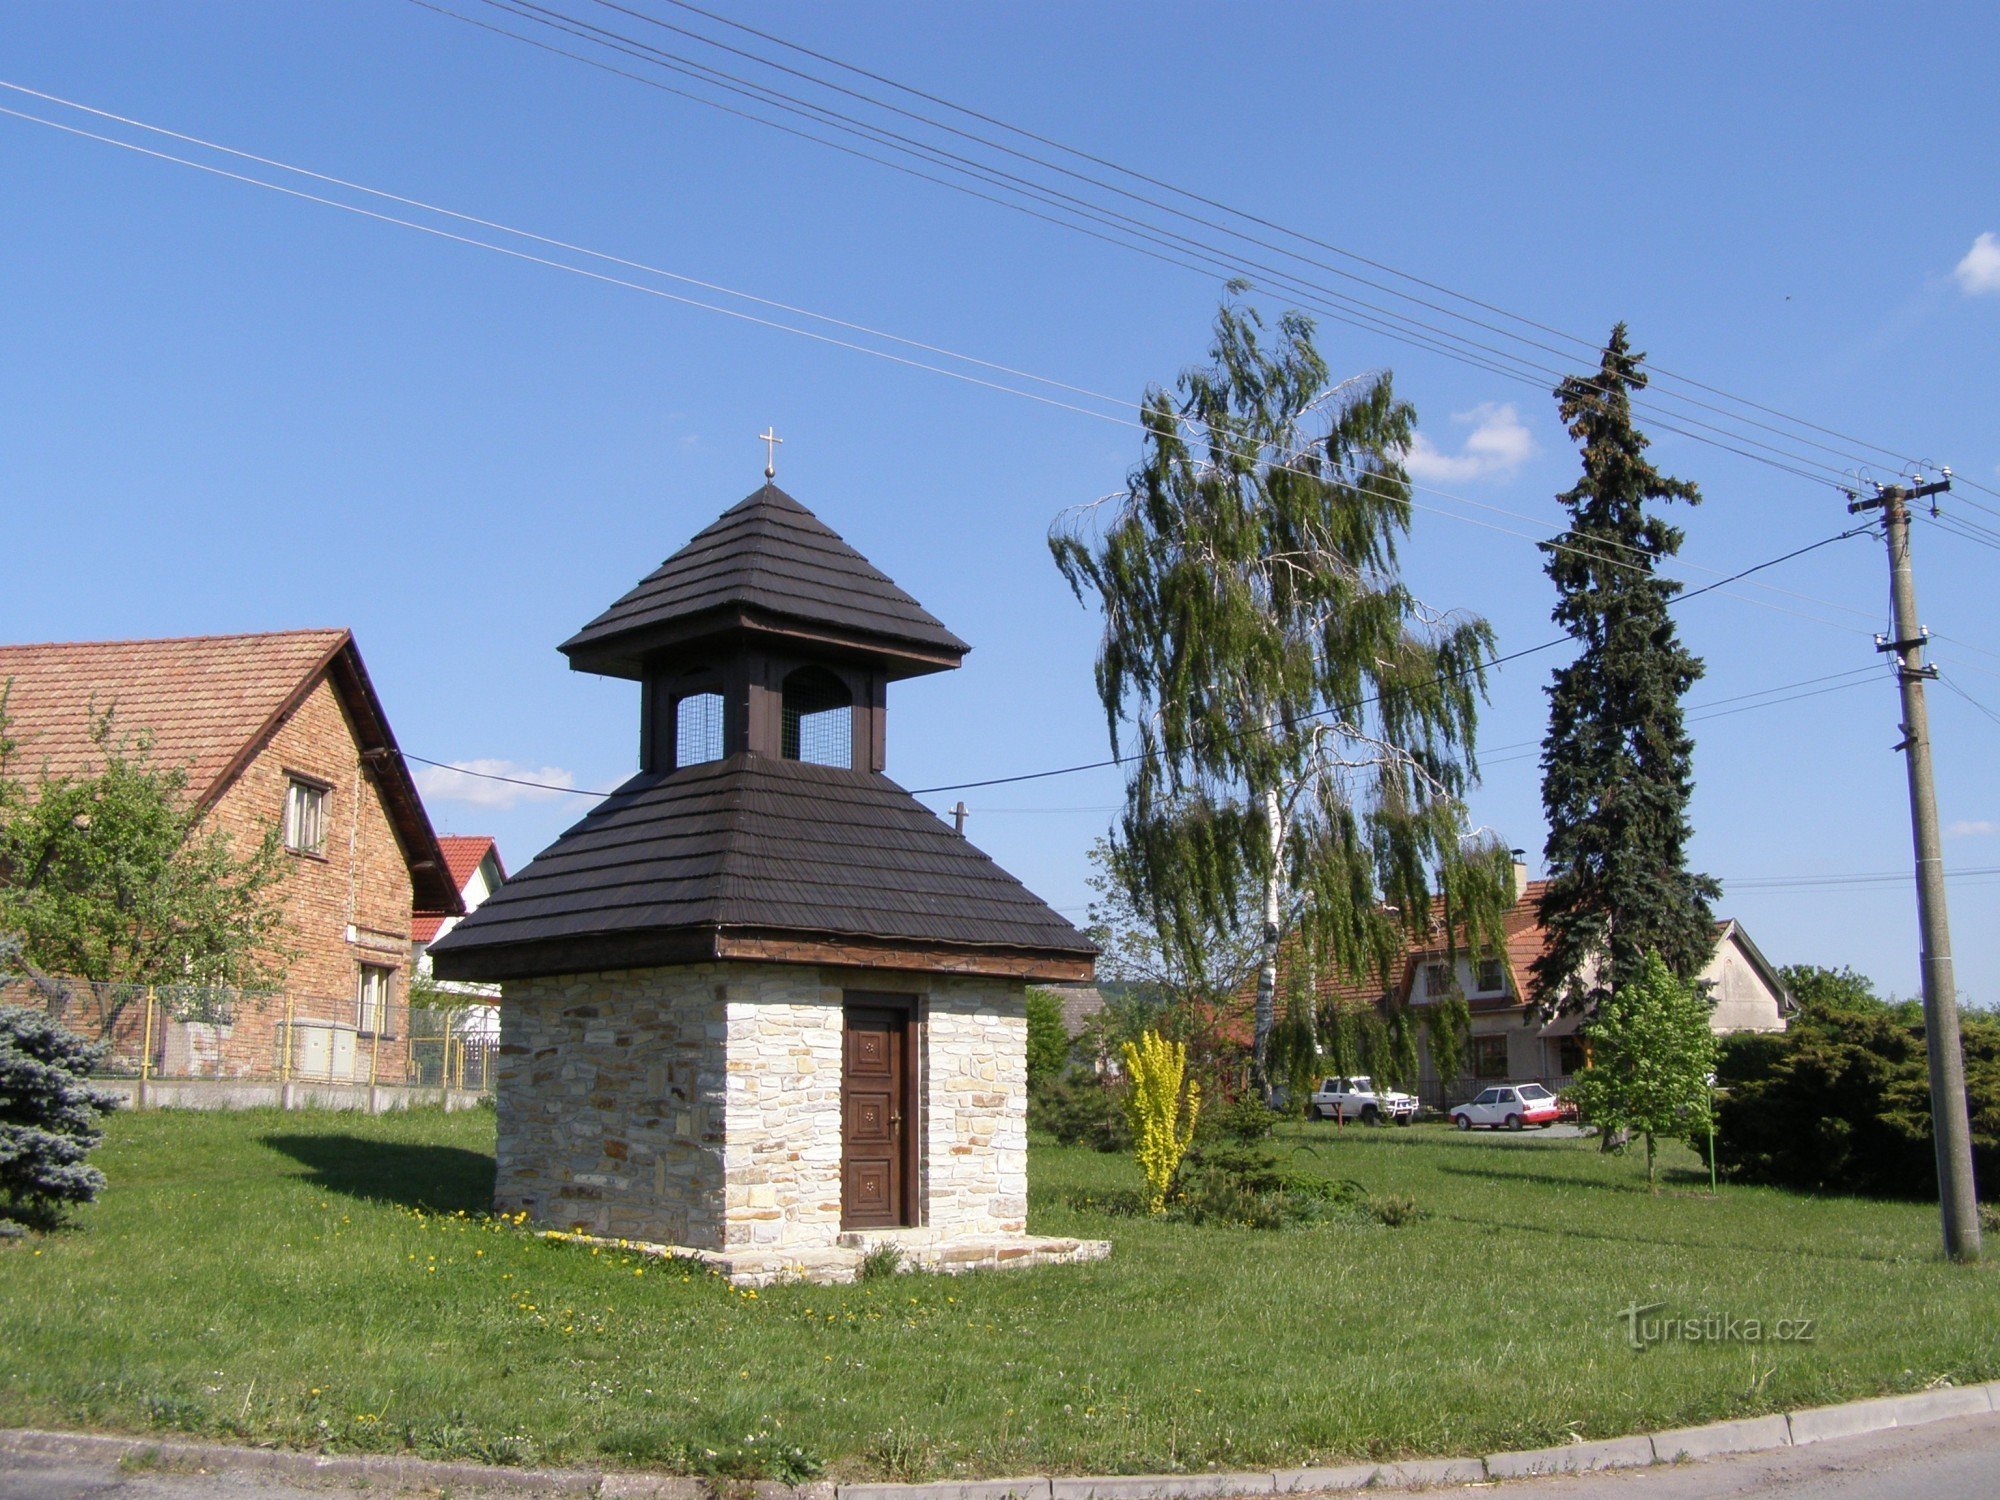 Bolehošť - Glockenturm